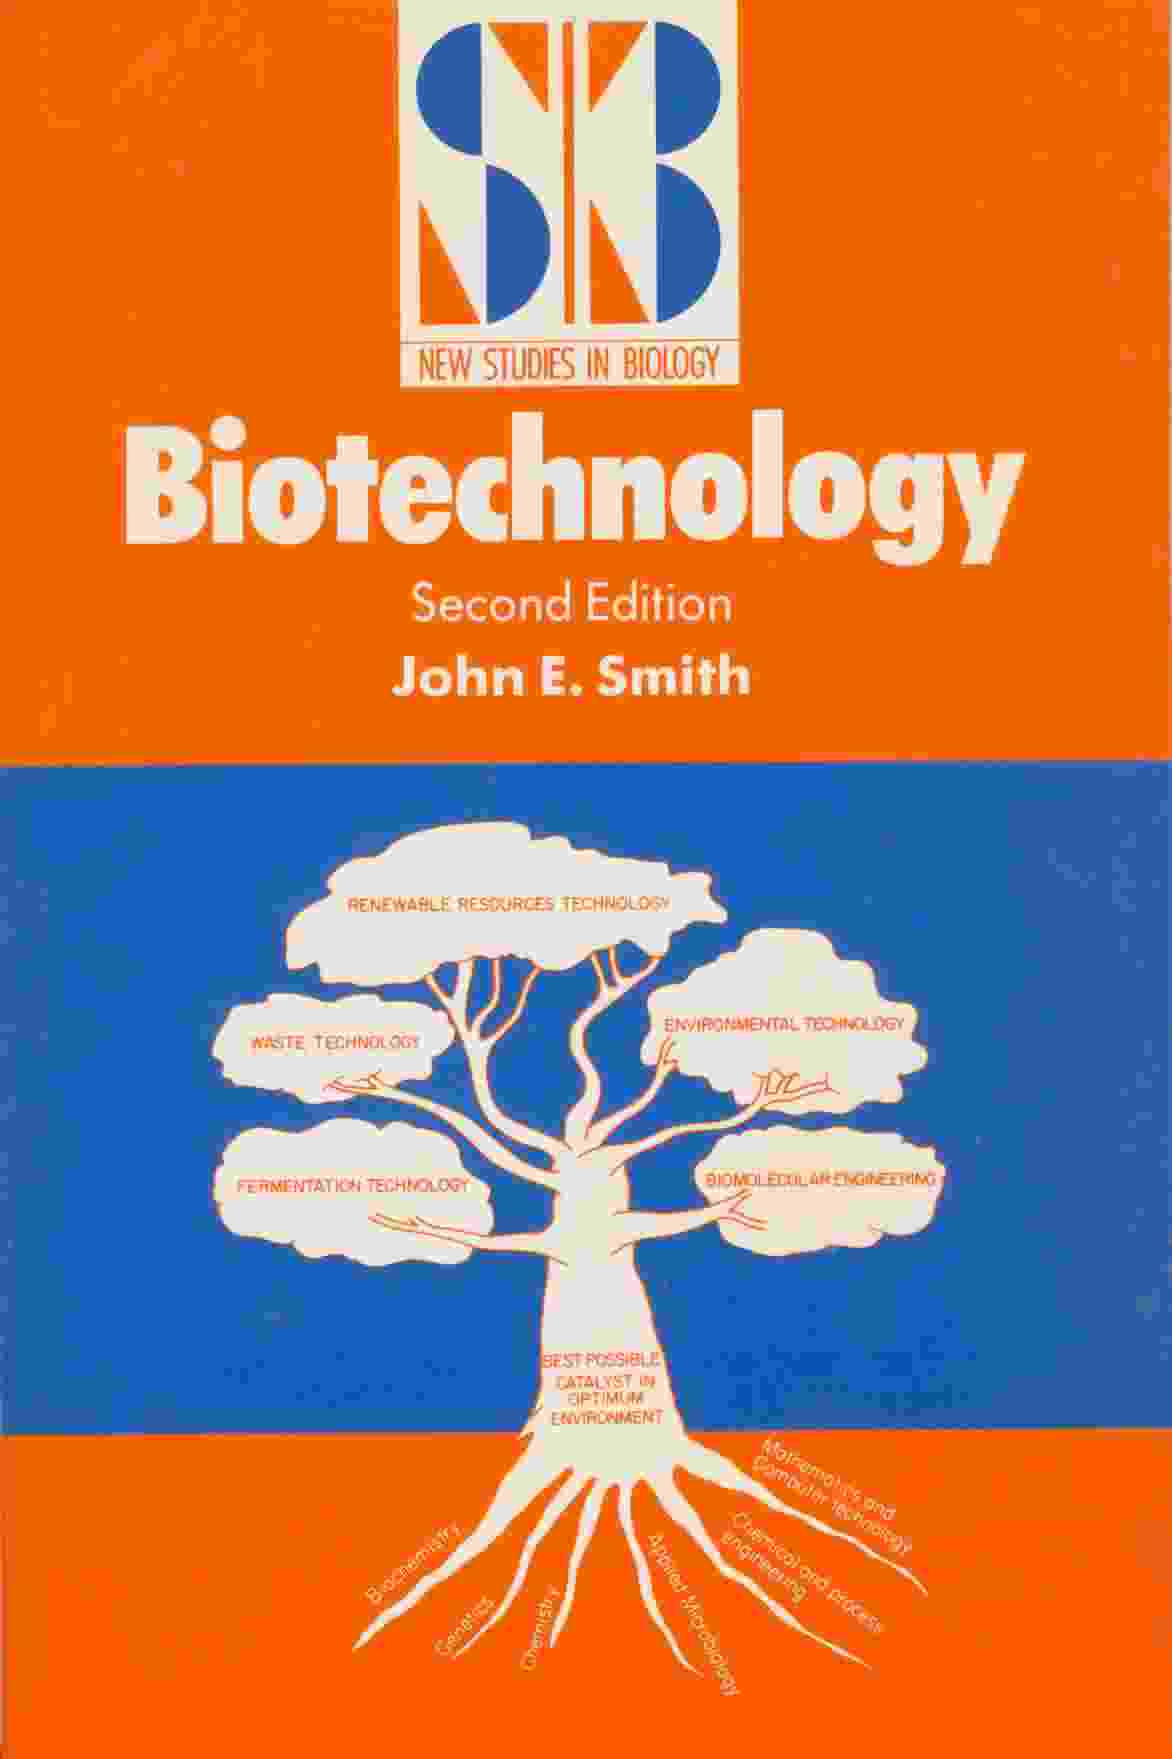 Edward Arnold Biotechnology